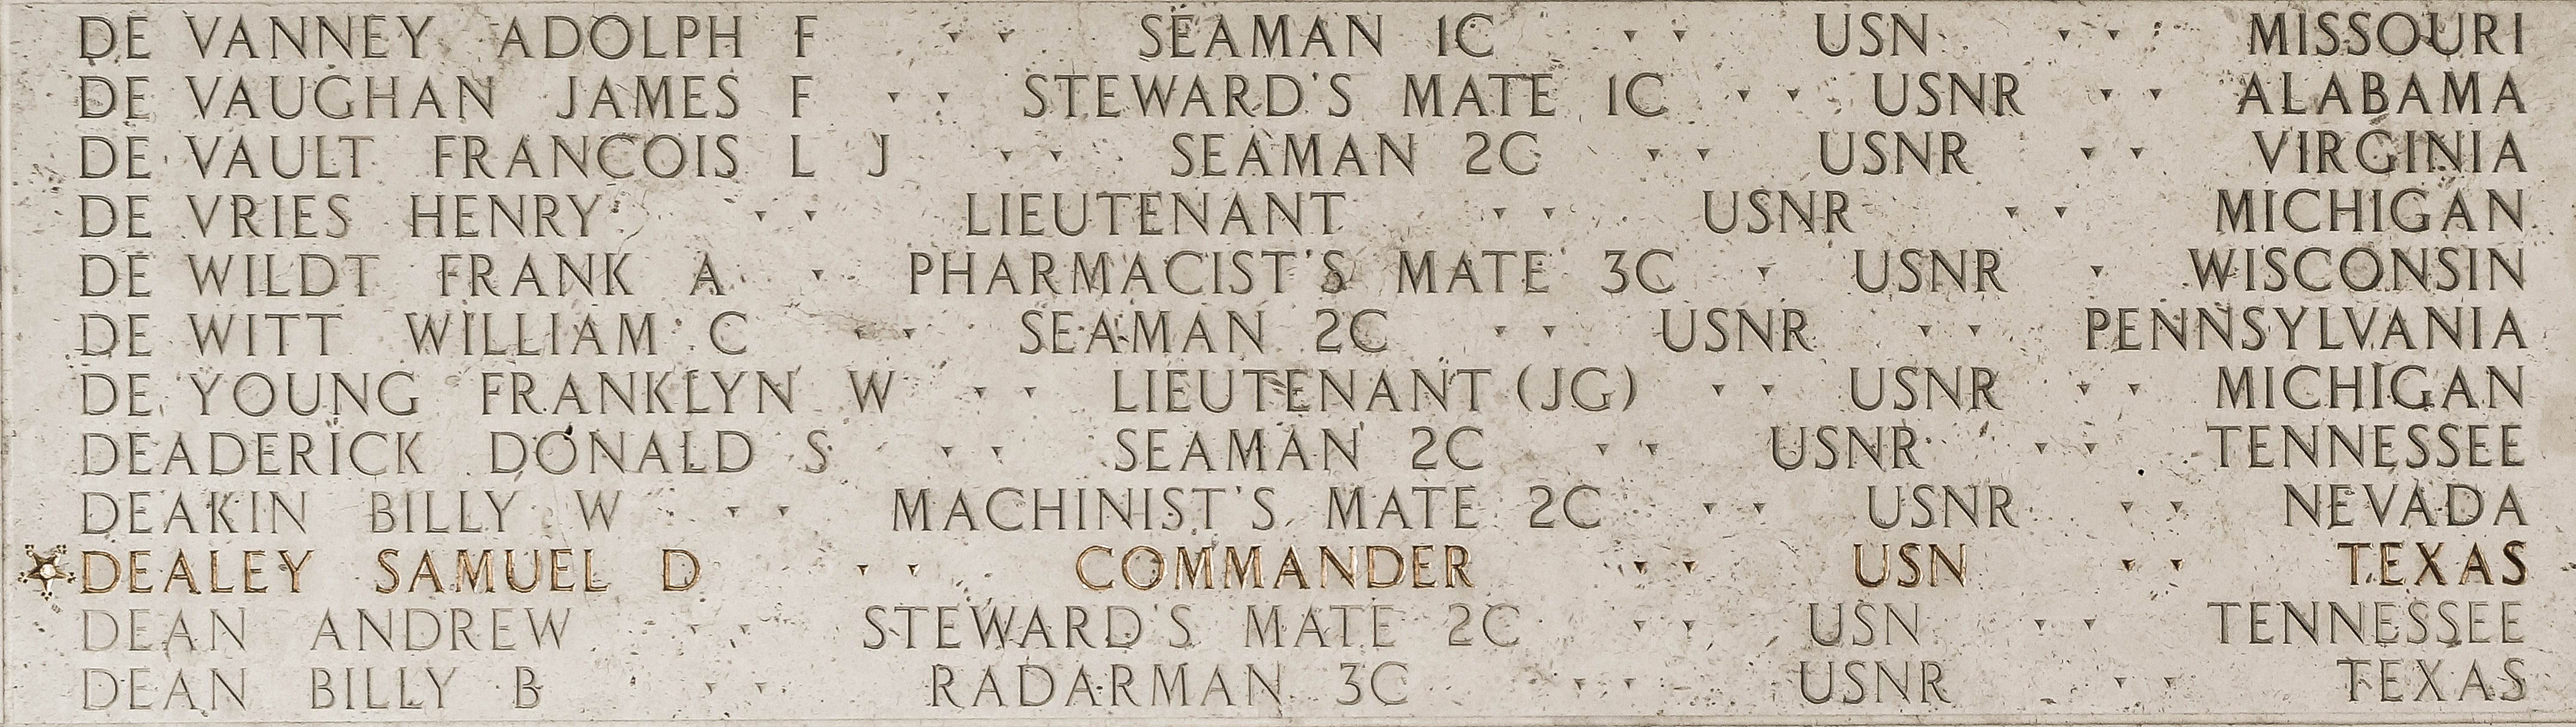 William C. De Witt, Seaman Second Class